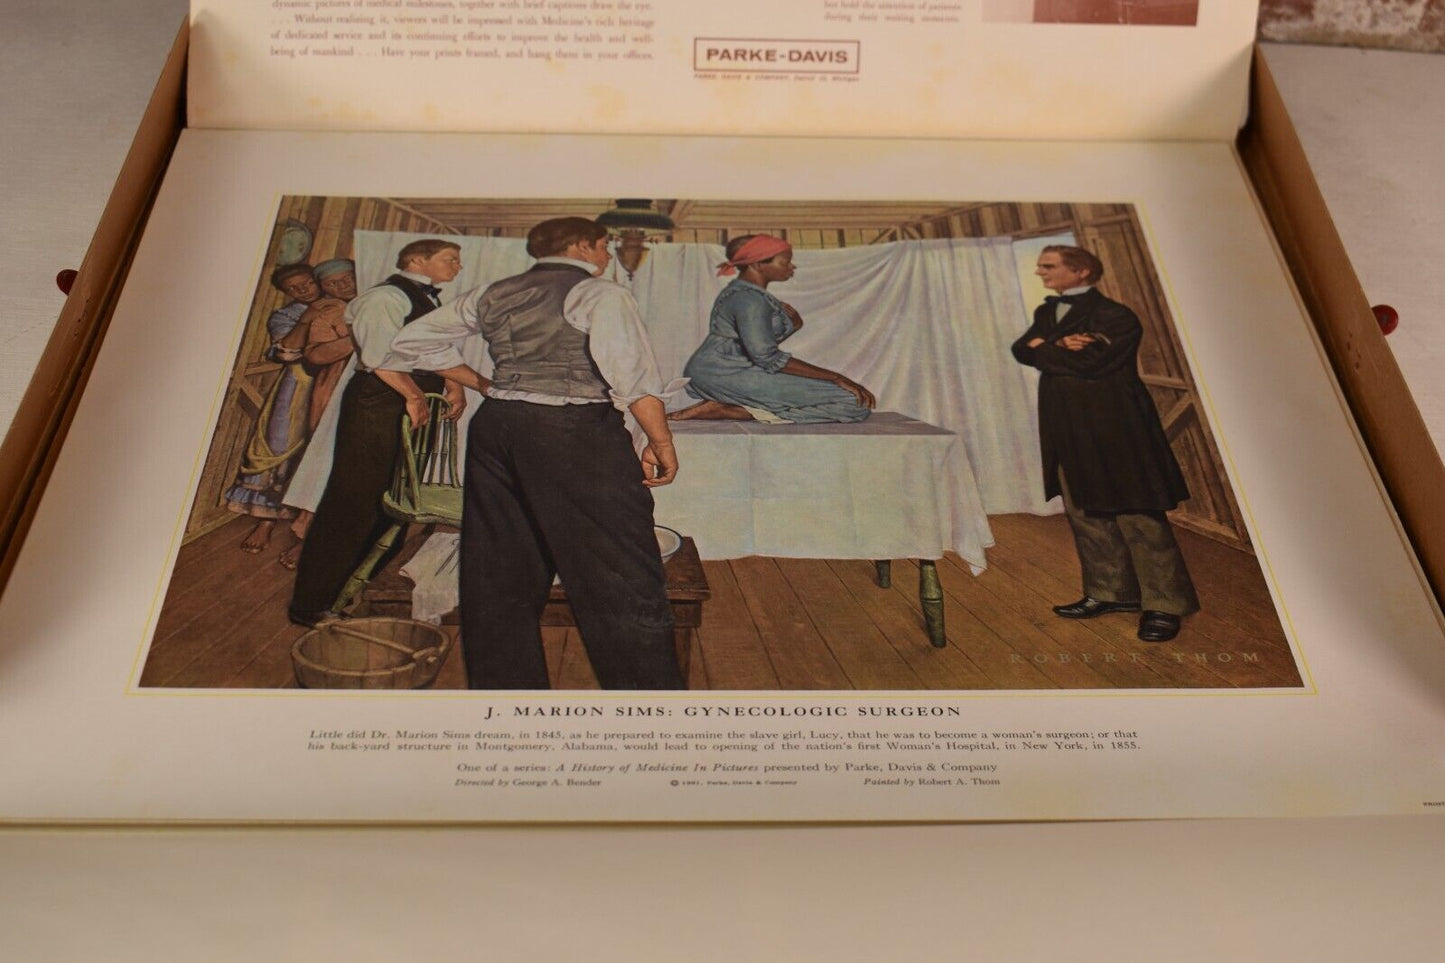 Vintage A History of Medicine Complete Series 1-8, by Parke, Davis, & Co.